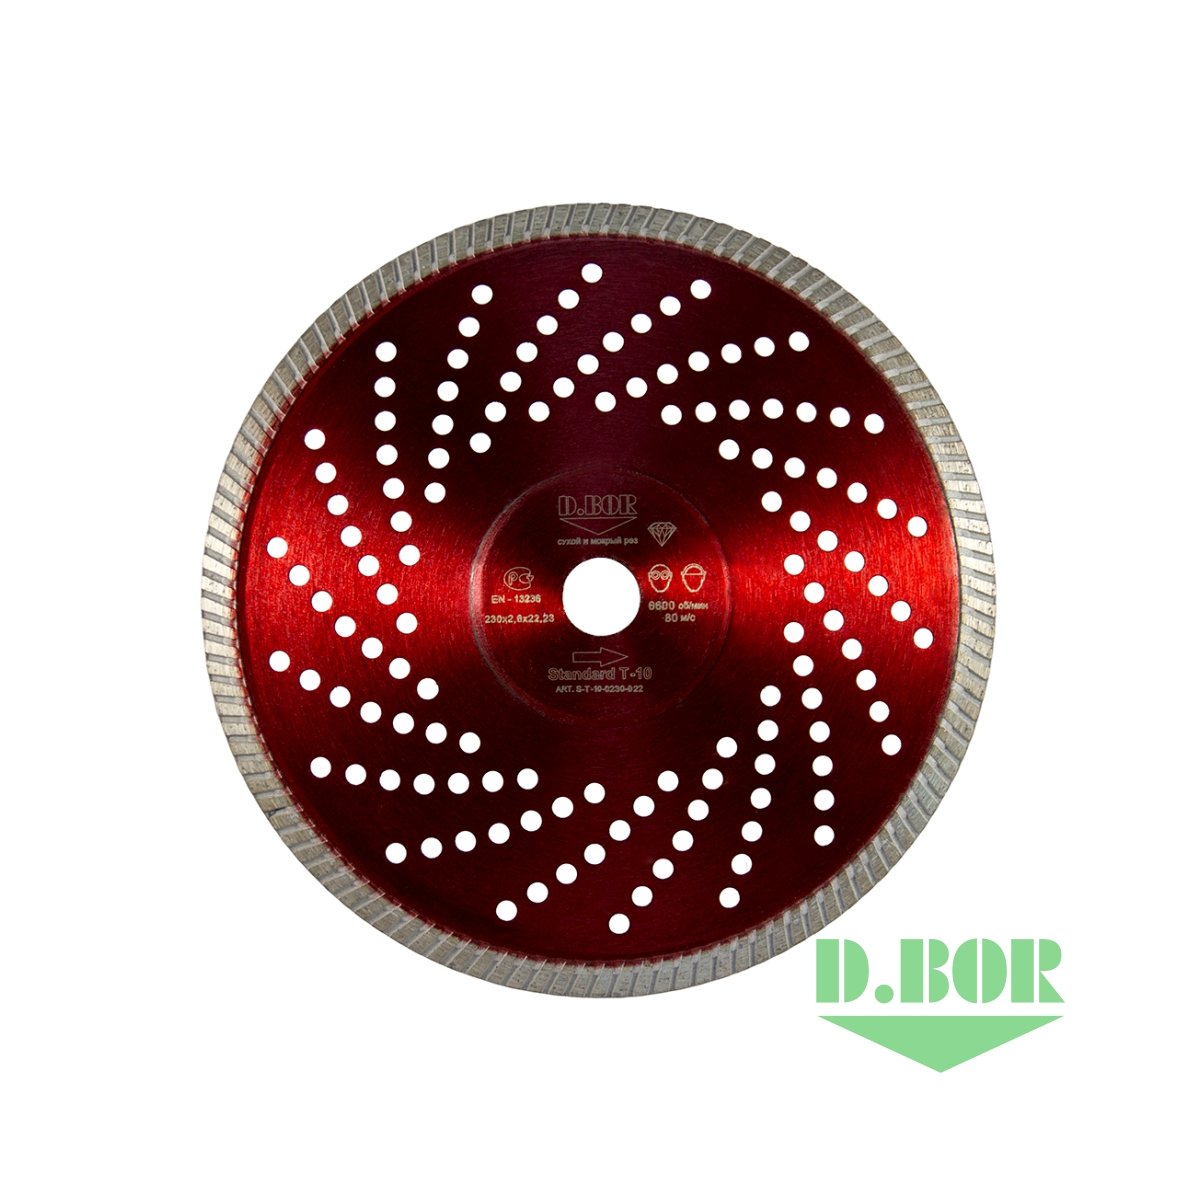 Алмазный диск Standard T-10, 300x3,0x25,40 (арт. S-T-10-0300-025) "D.BOR"